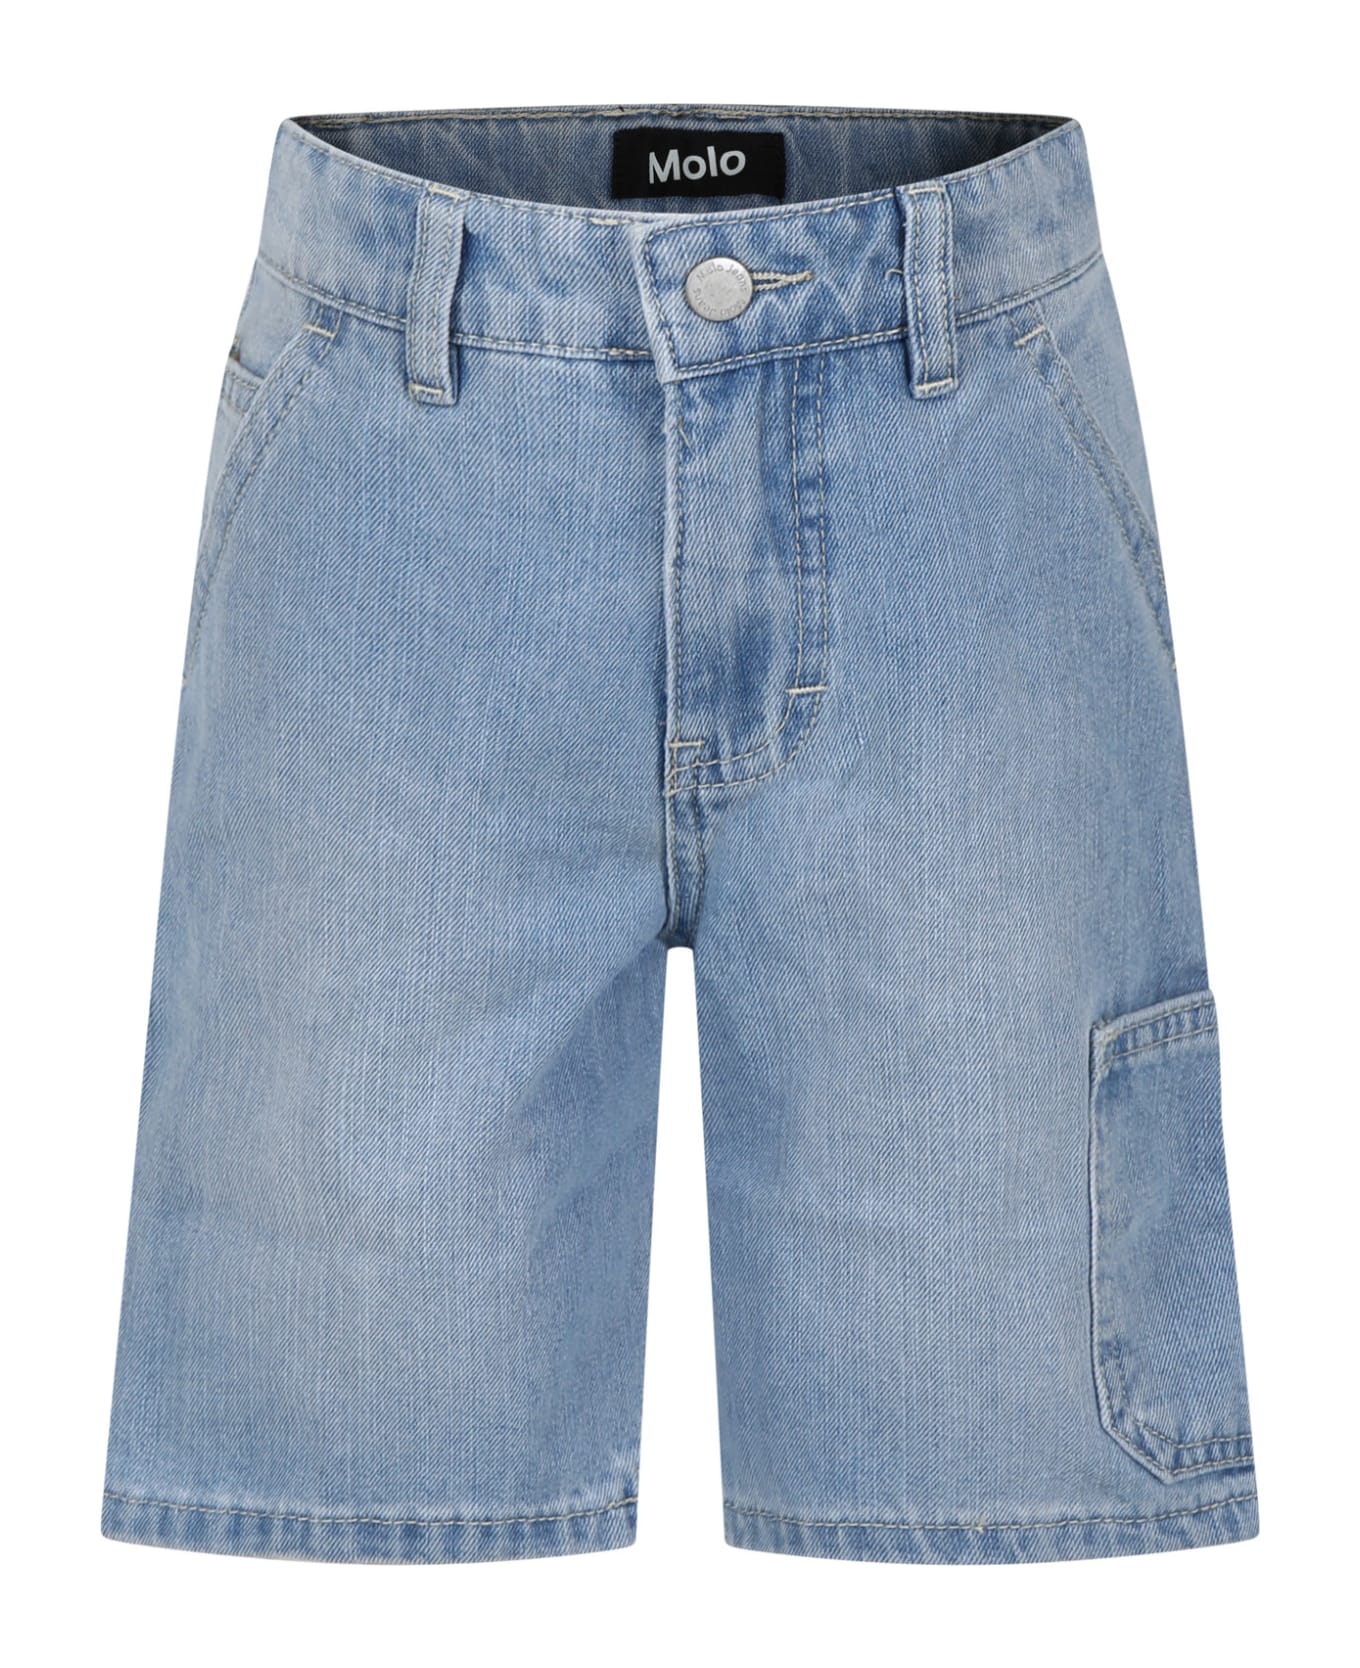 Molo Casual Denim Shorts For Kids - Denim